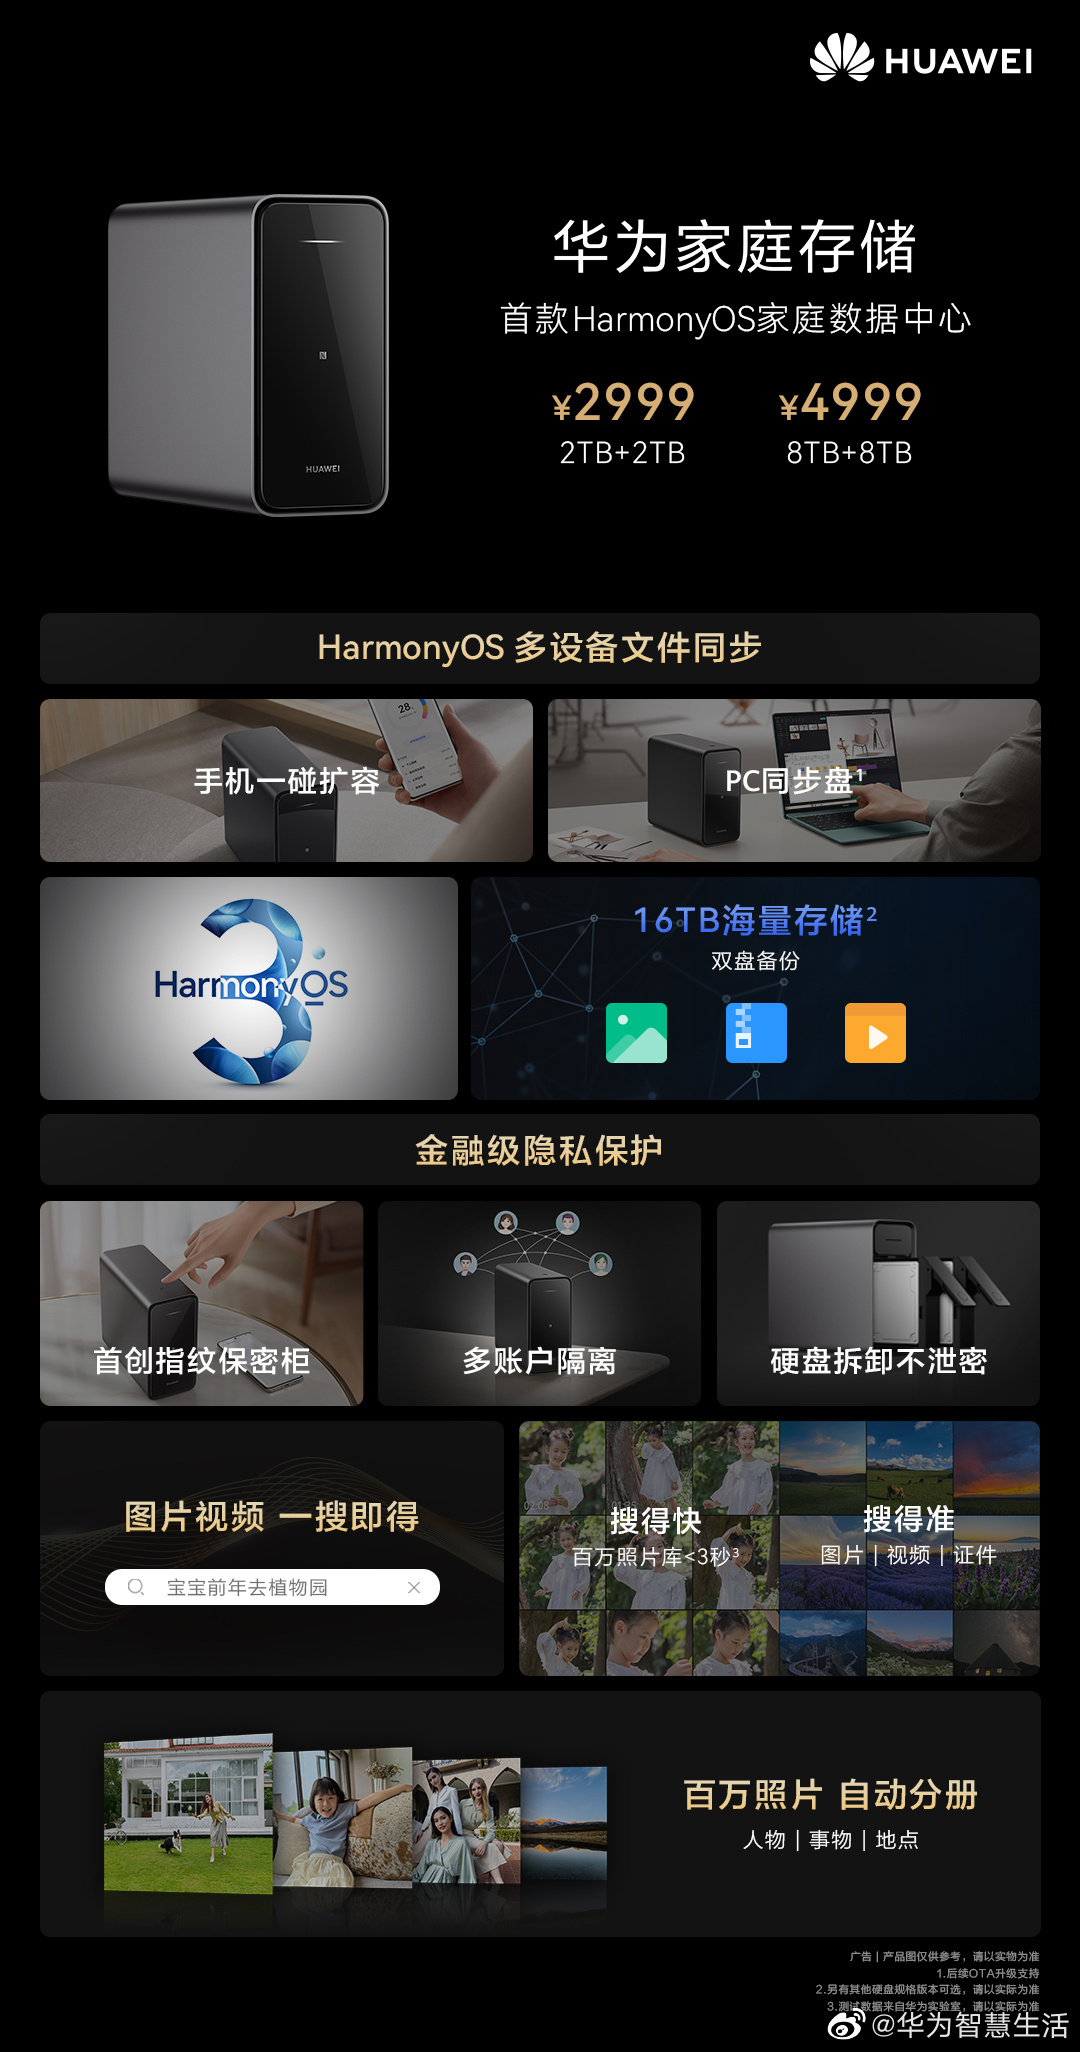 Huawei Home Storage Image